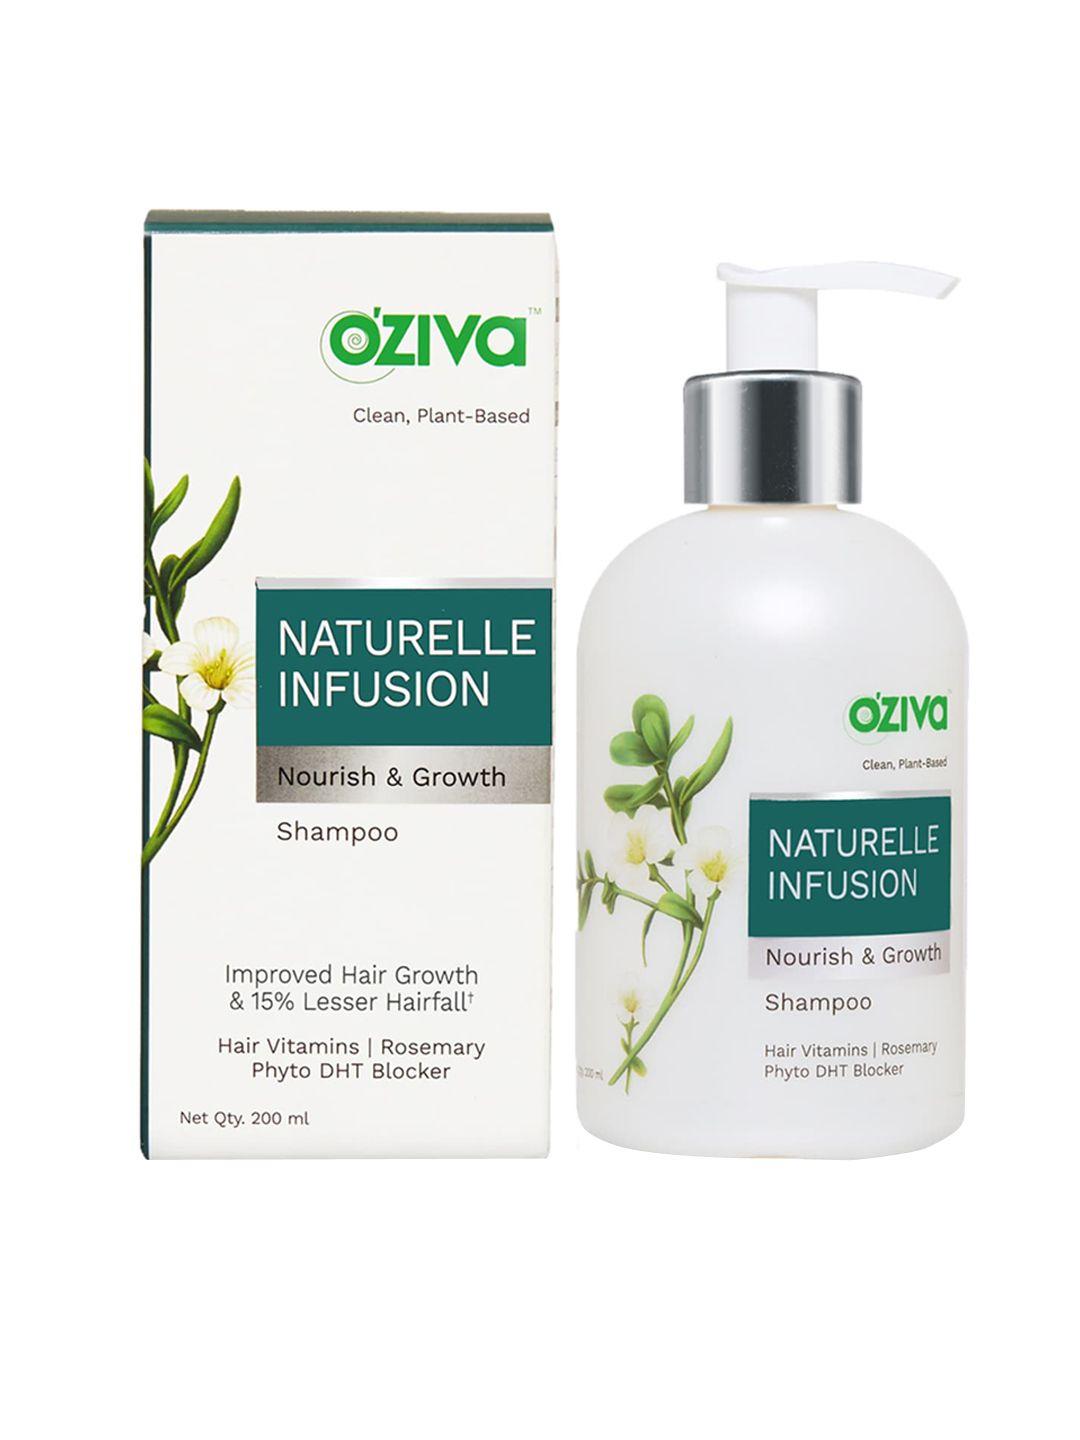 oziva naturelle infusion nourish & growth shampoo 200ml